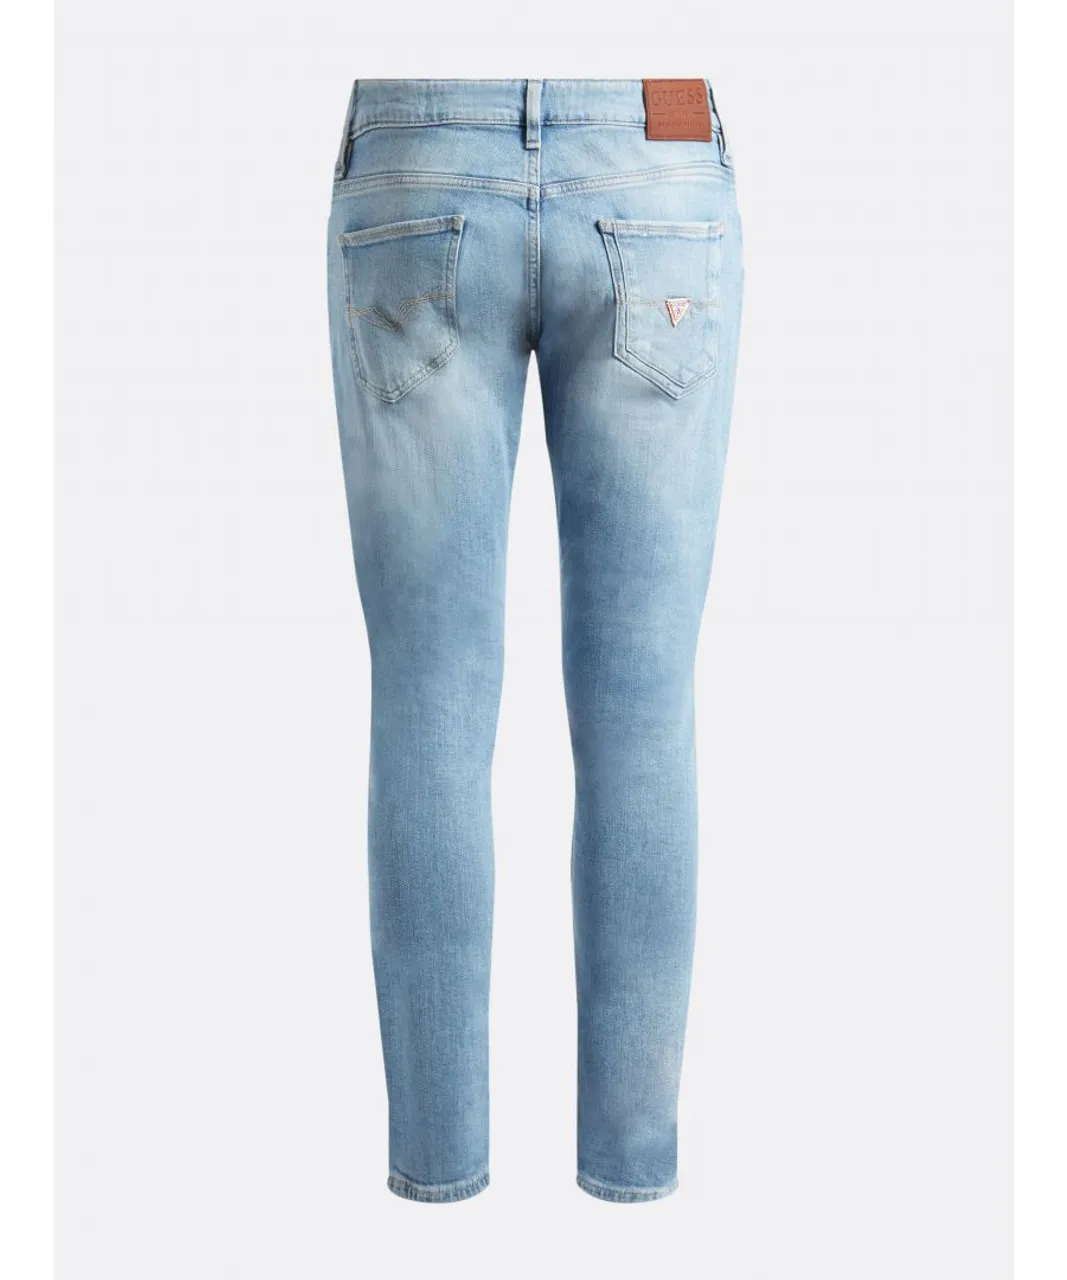 Guess Mens Miami Skinny Fit Denim Jeans Pant - Light Blue